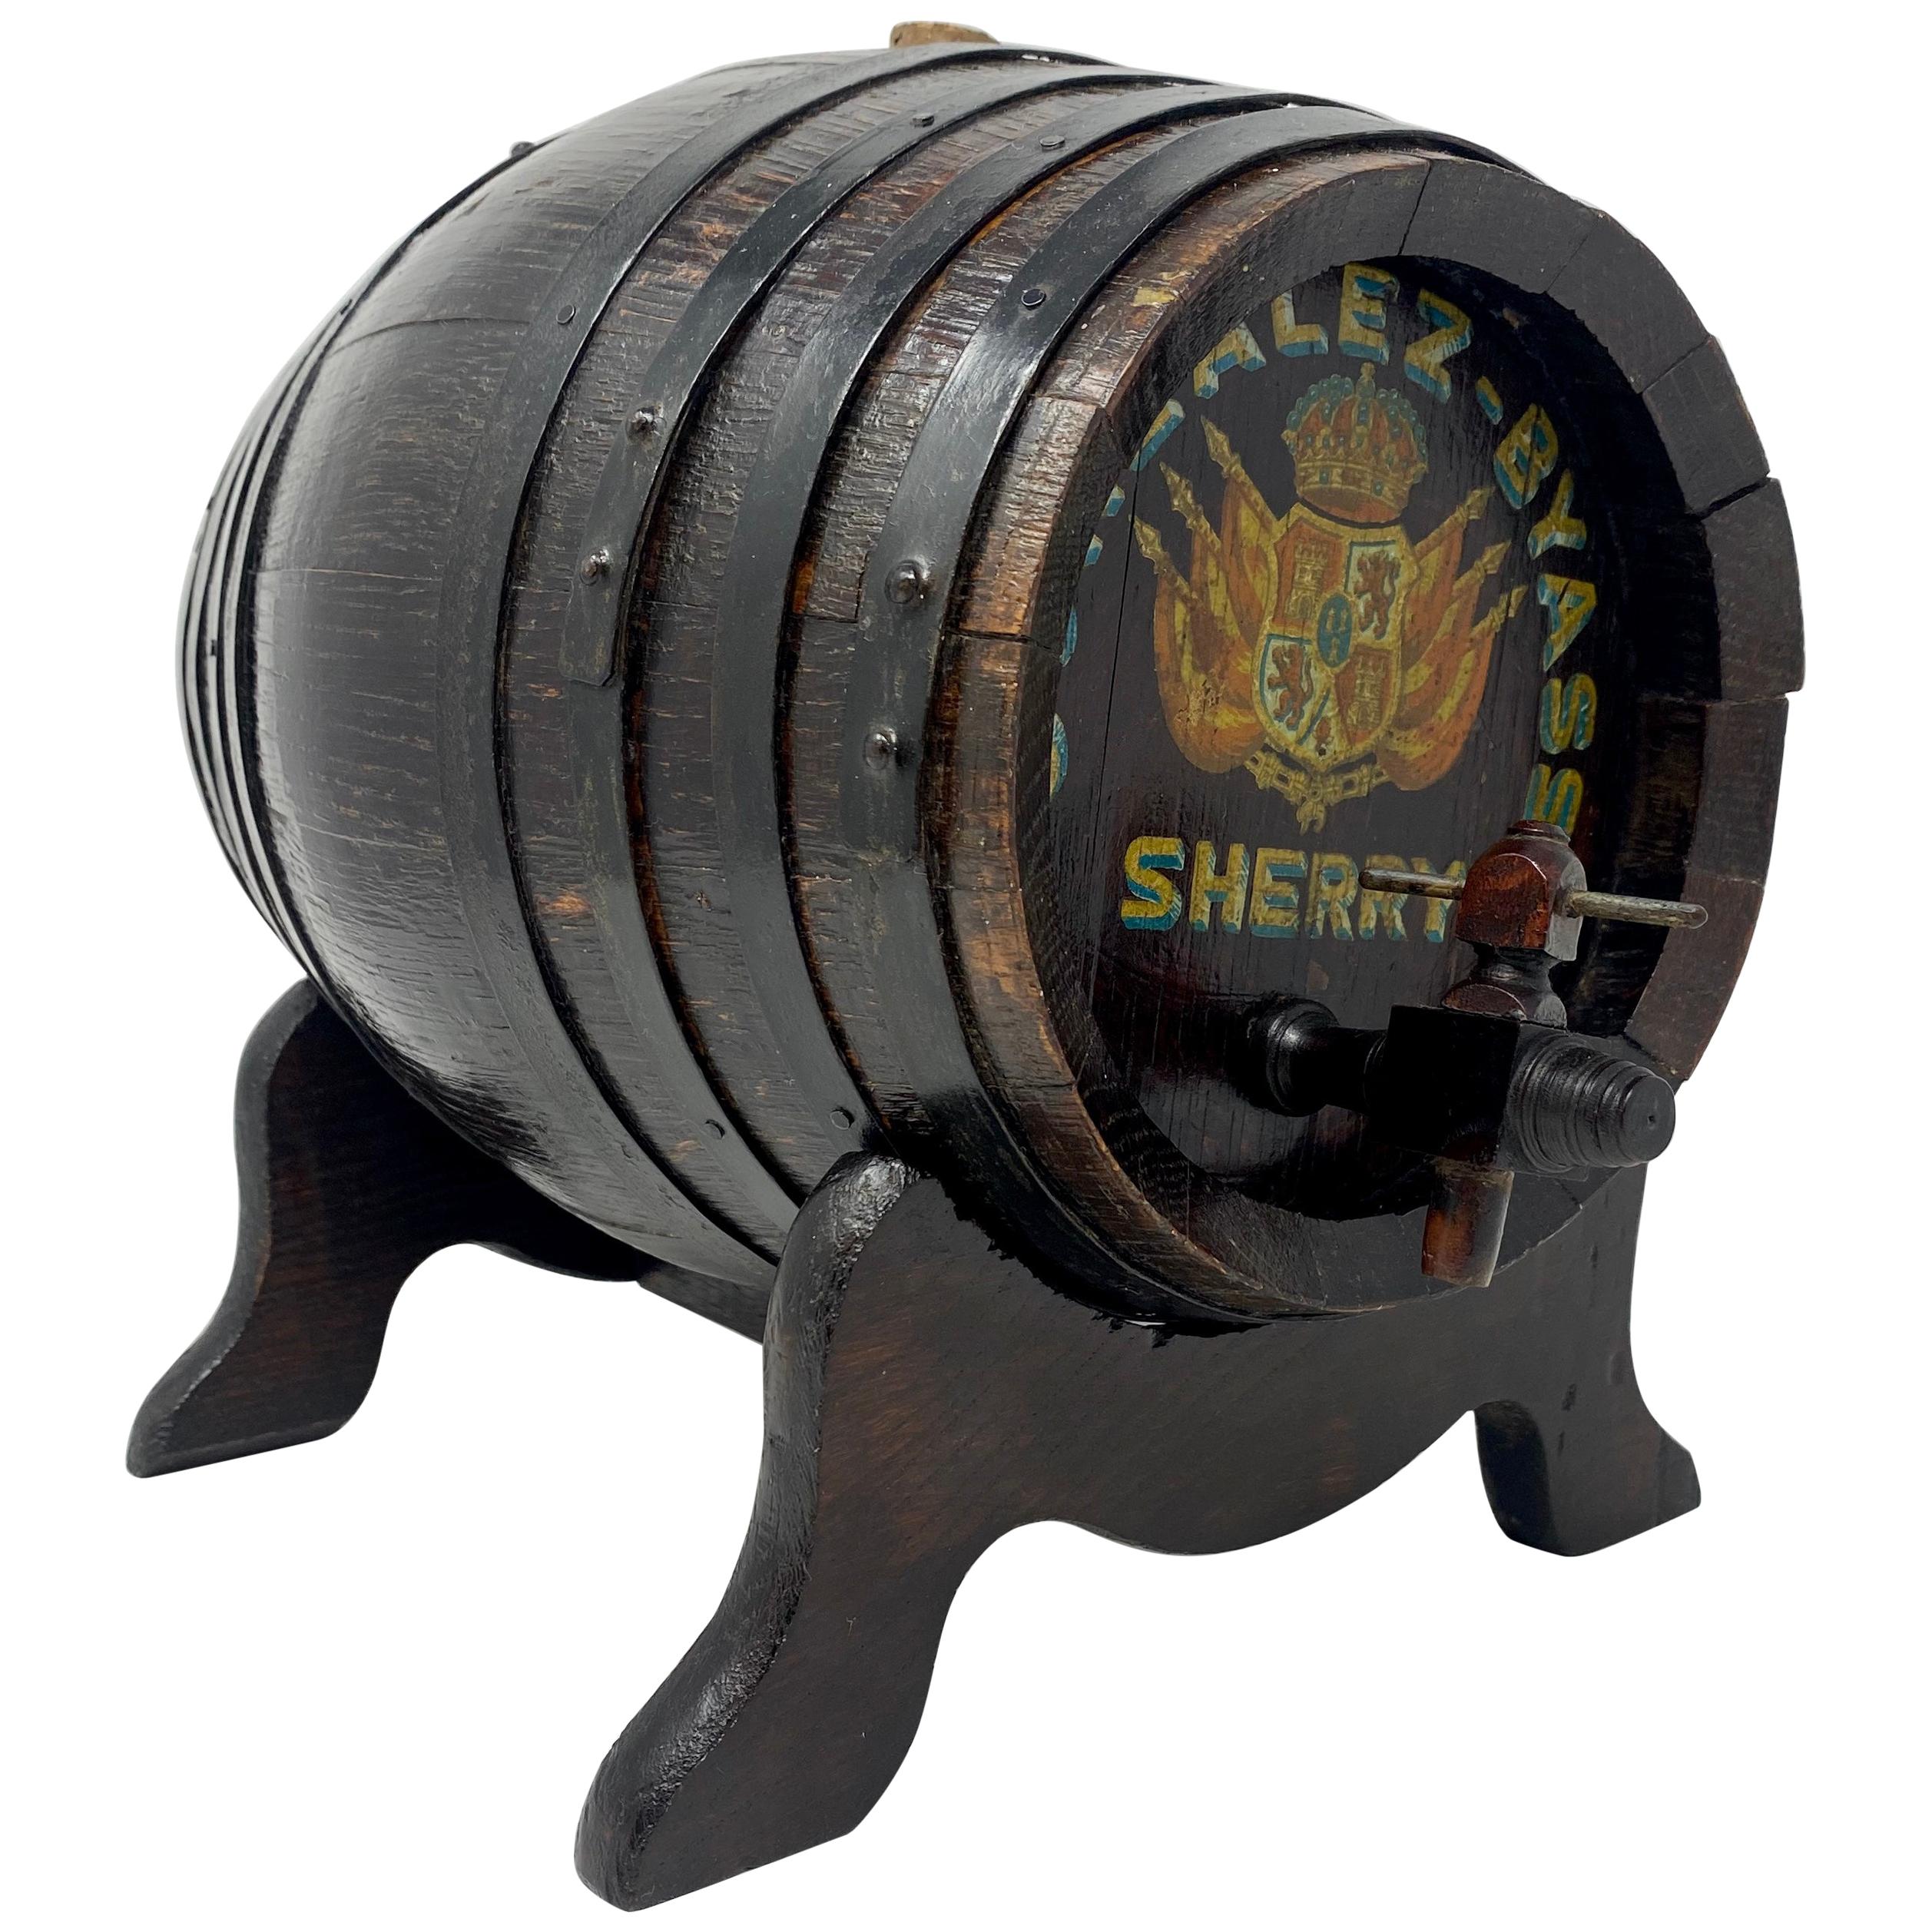 Small Antique English Oak Barrel Made for Spanish "González Byass" Sherry